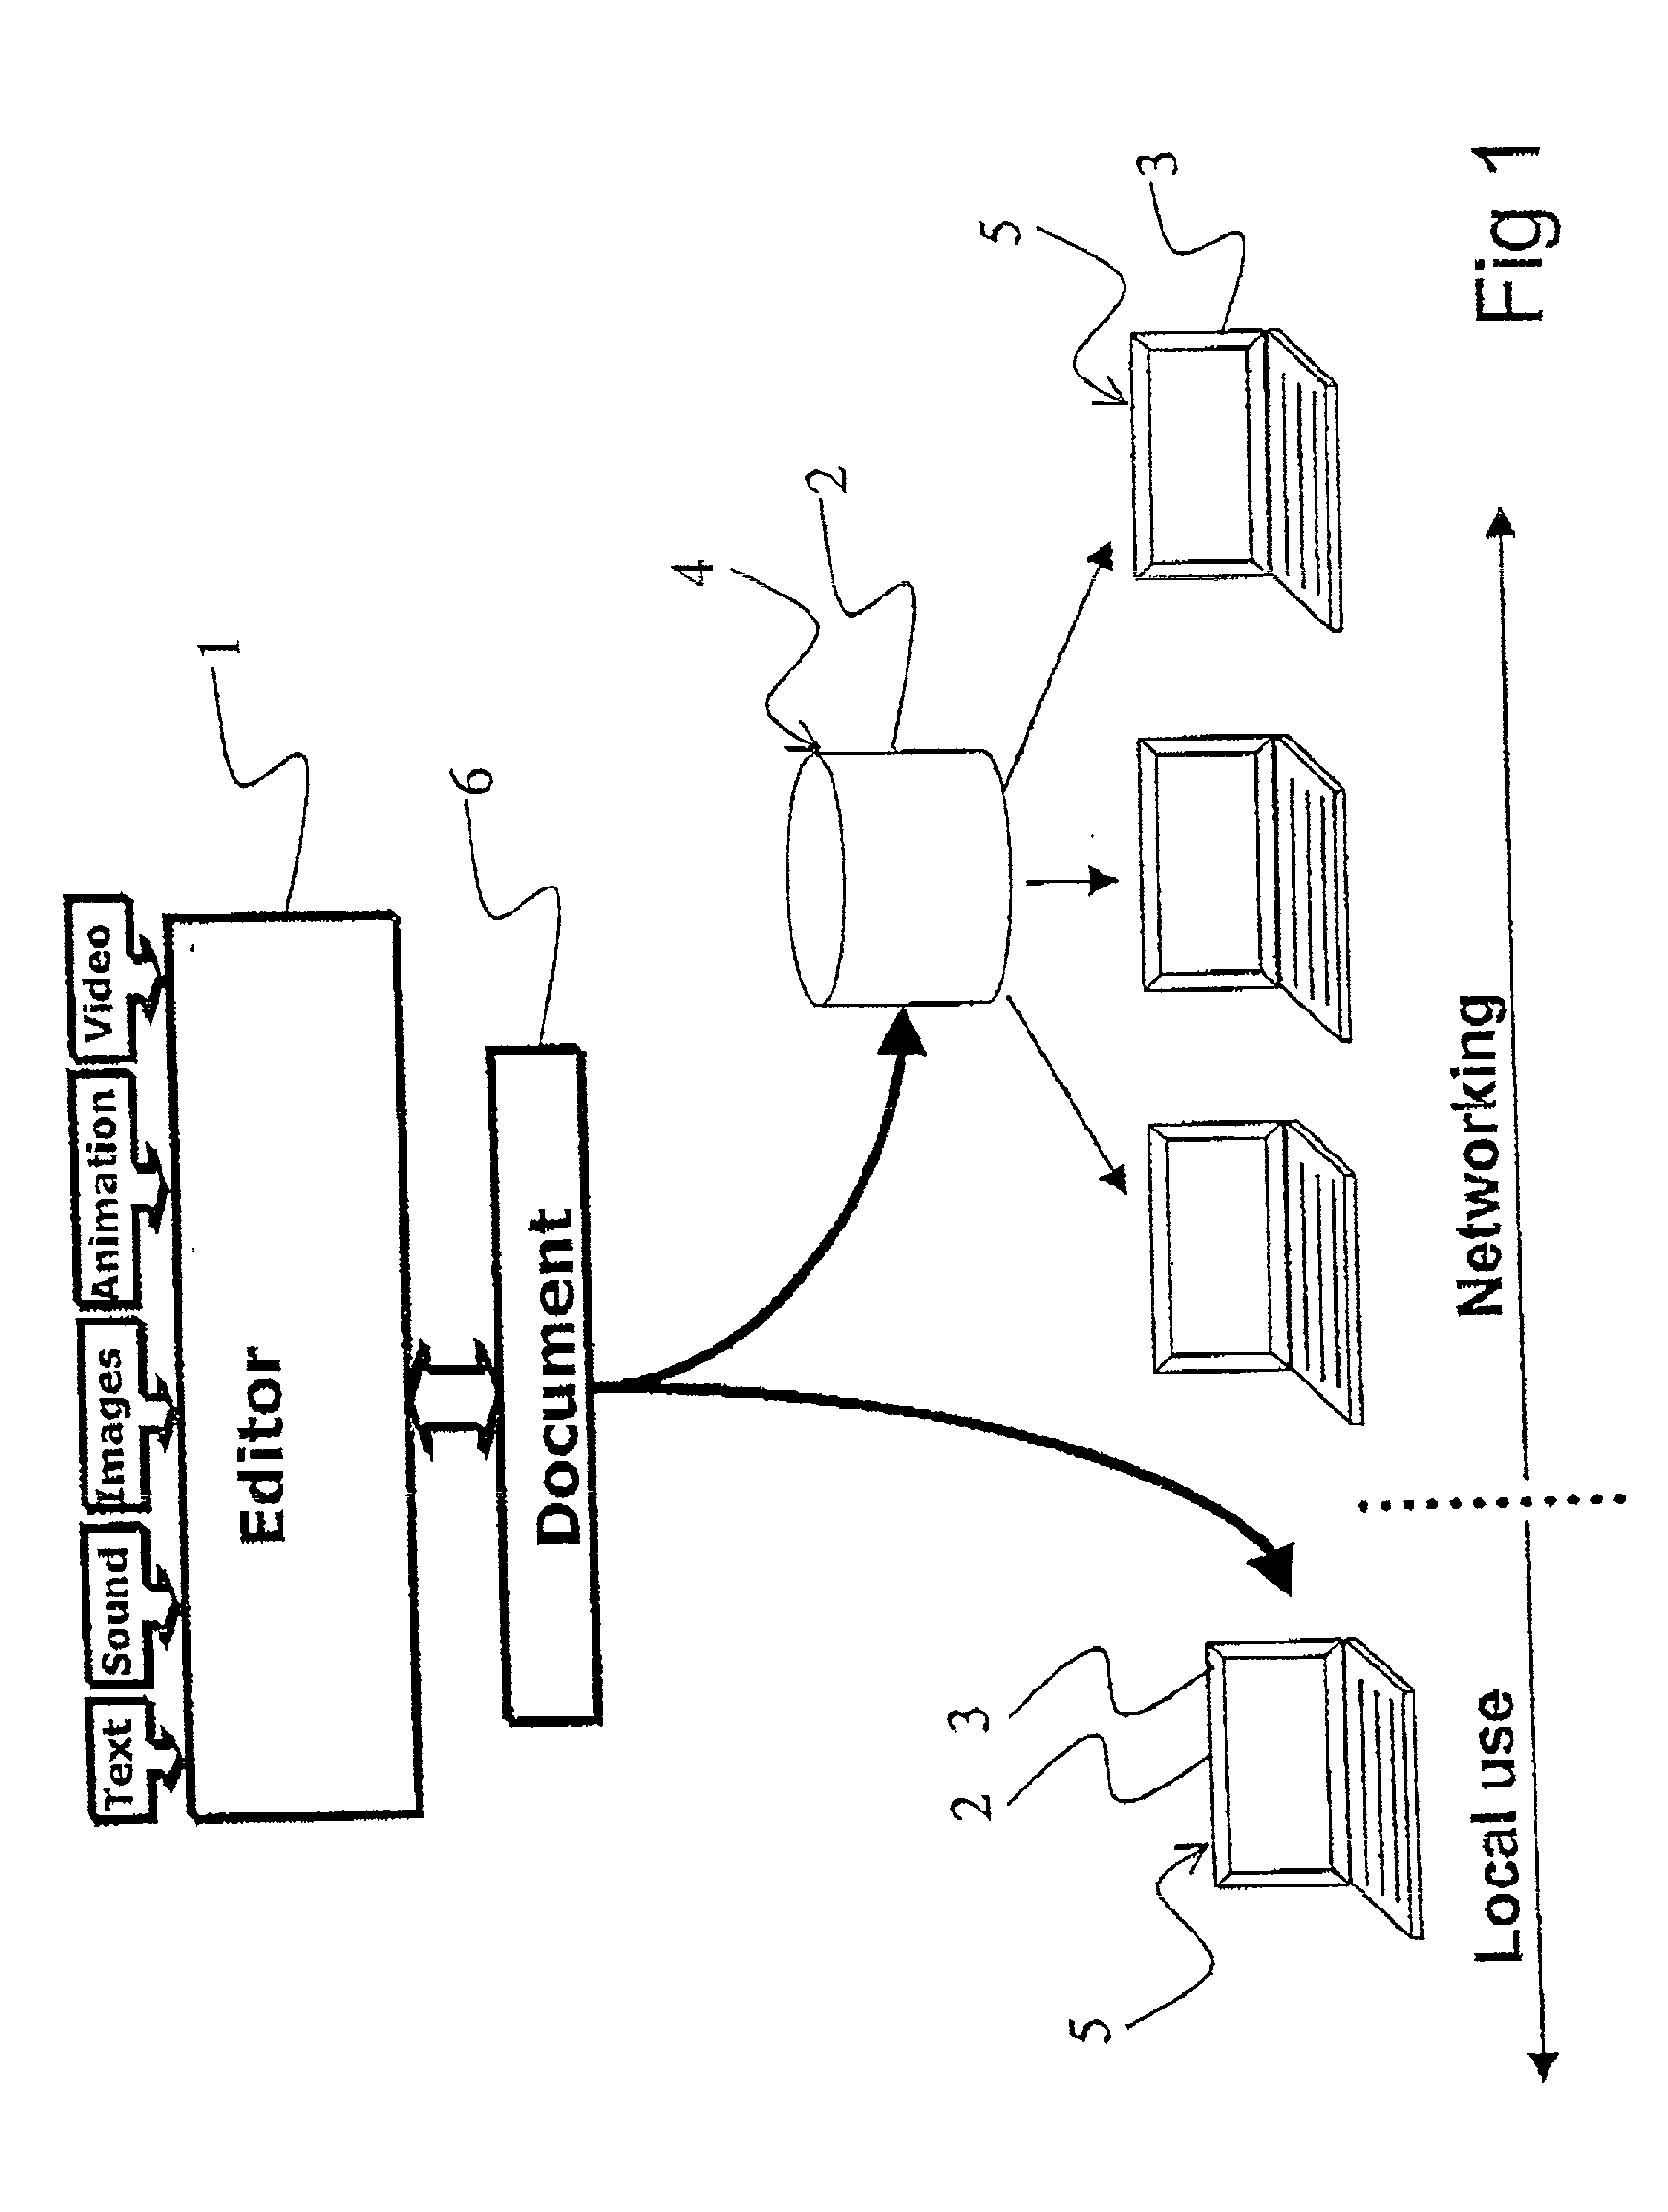 System for generating softskill simulation